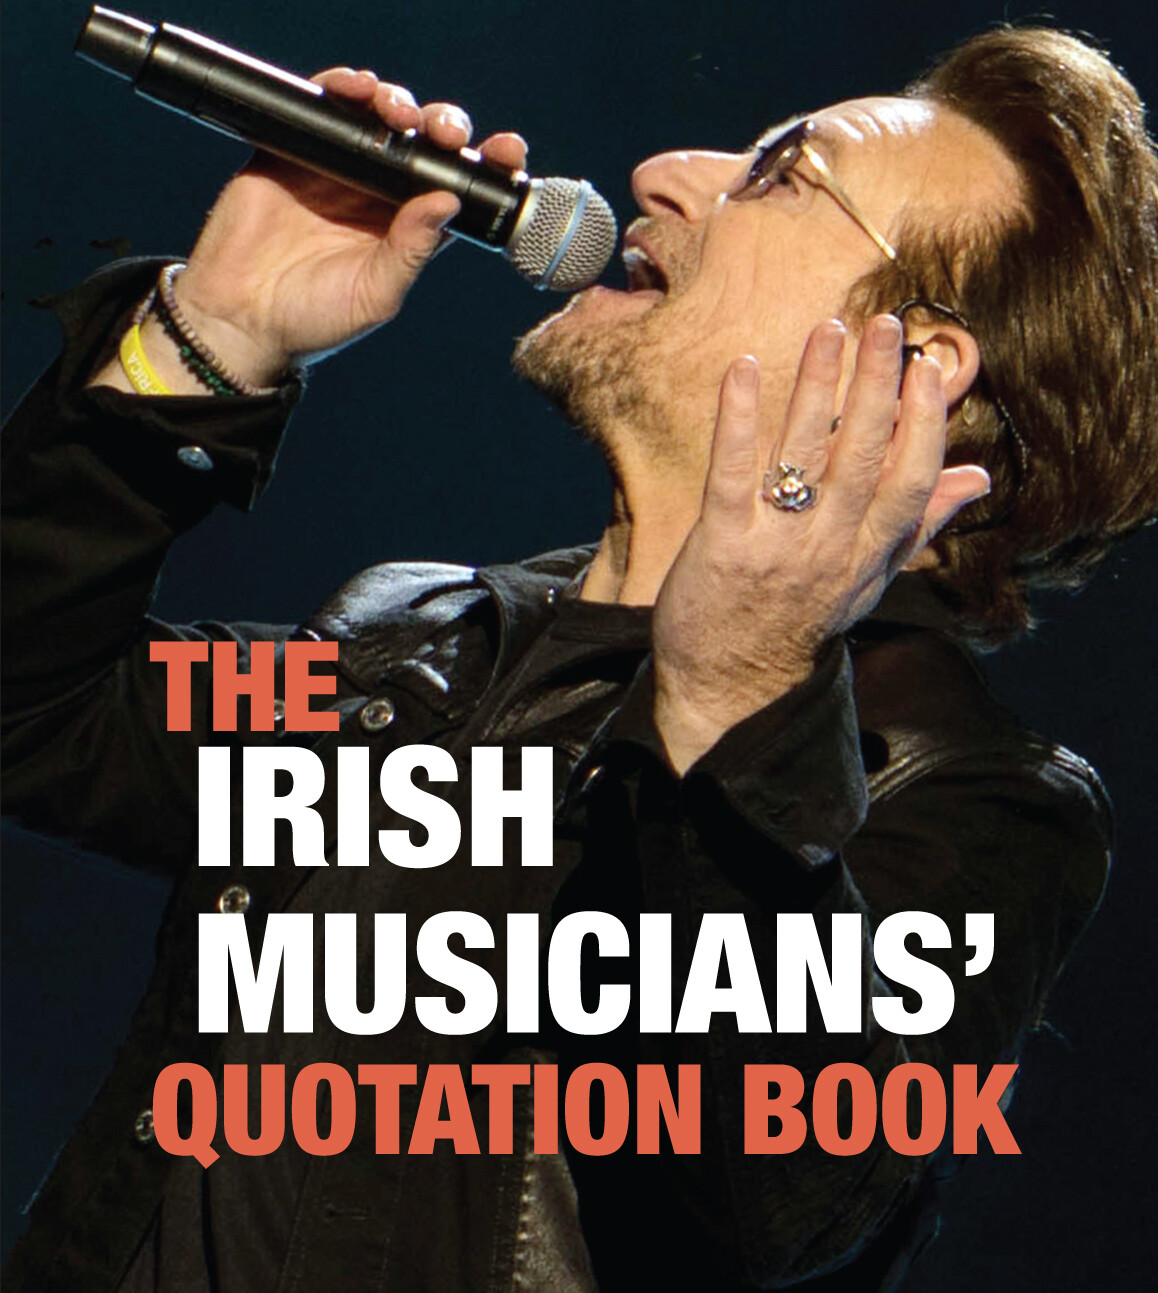 THE IRISH MUSICIANS' QUOTATIONS BOOK